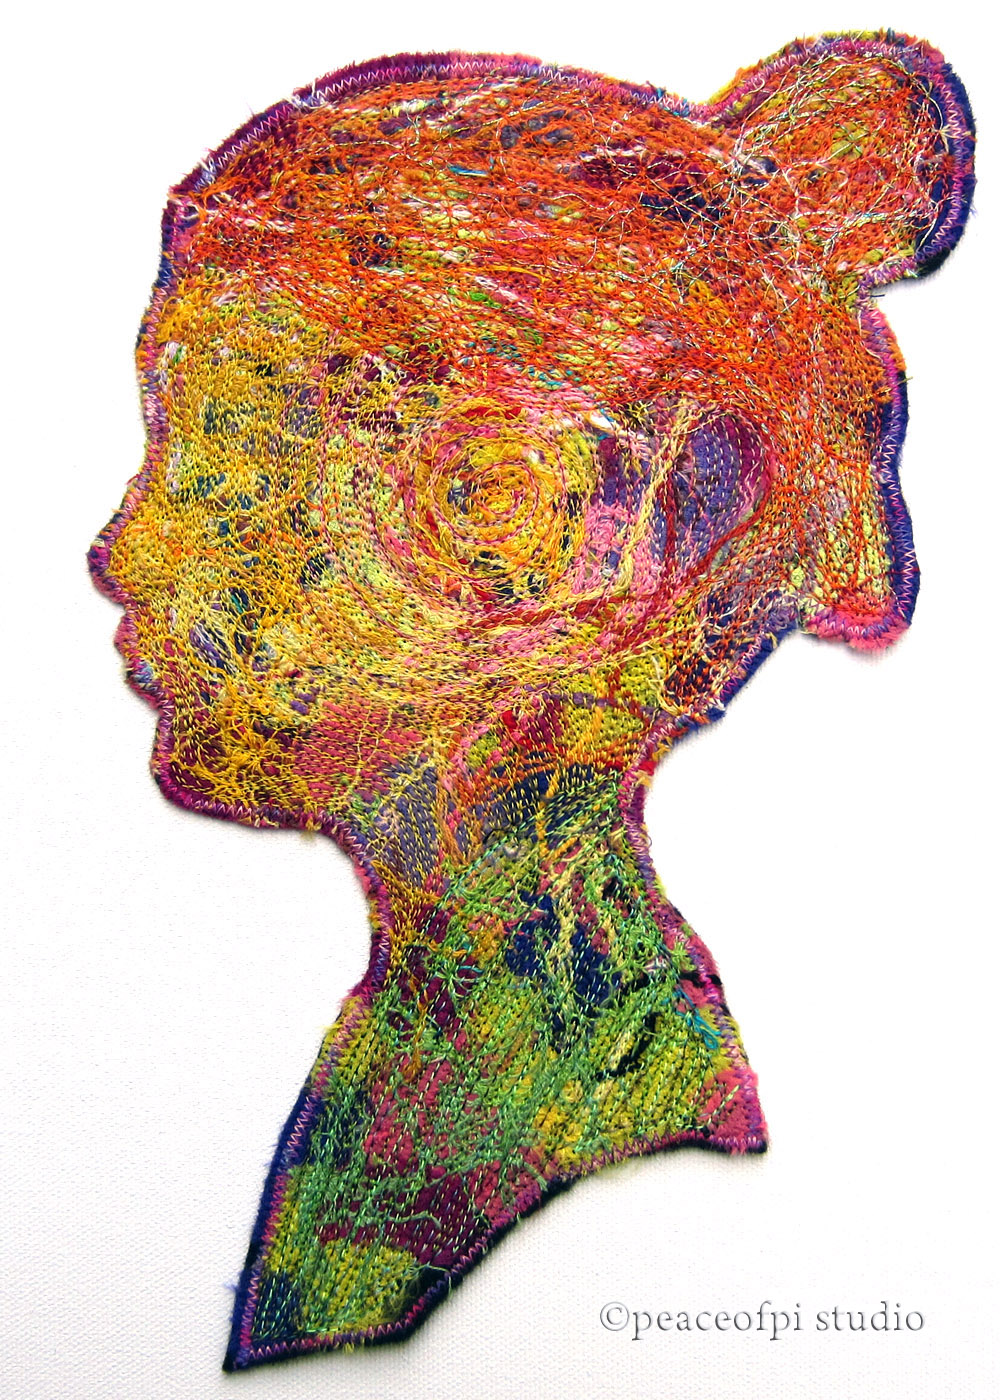 Peaceofpi studio: Profiles I: Stitched Silhouette Thread Art